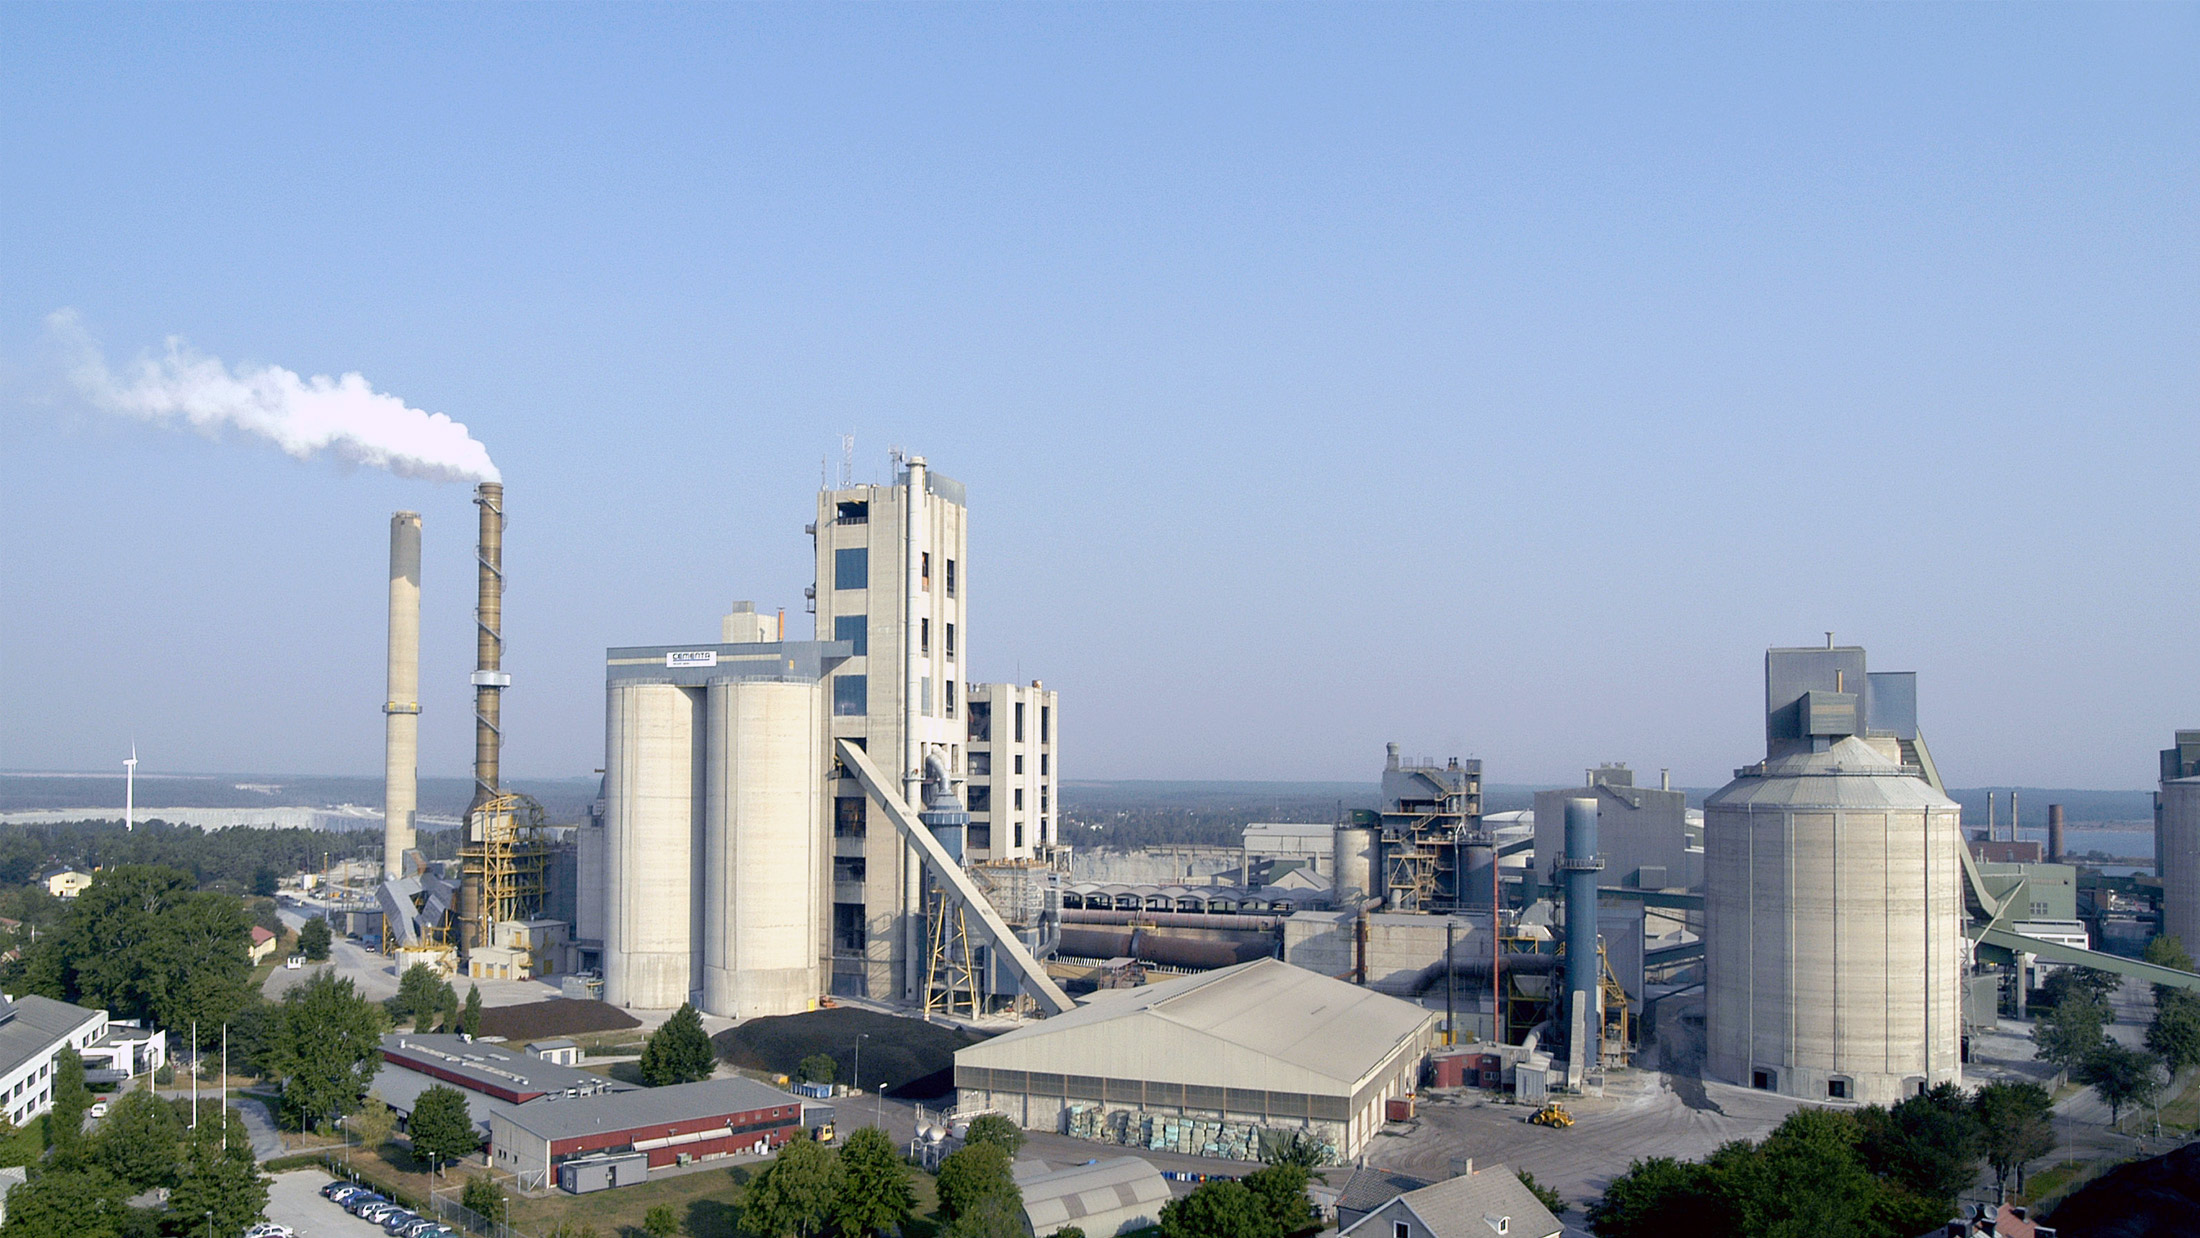 Cementa’s factory in Slite, Sweden